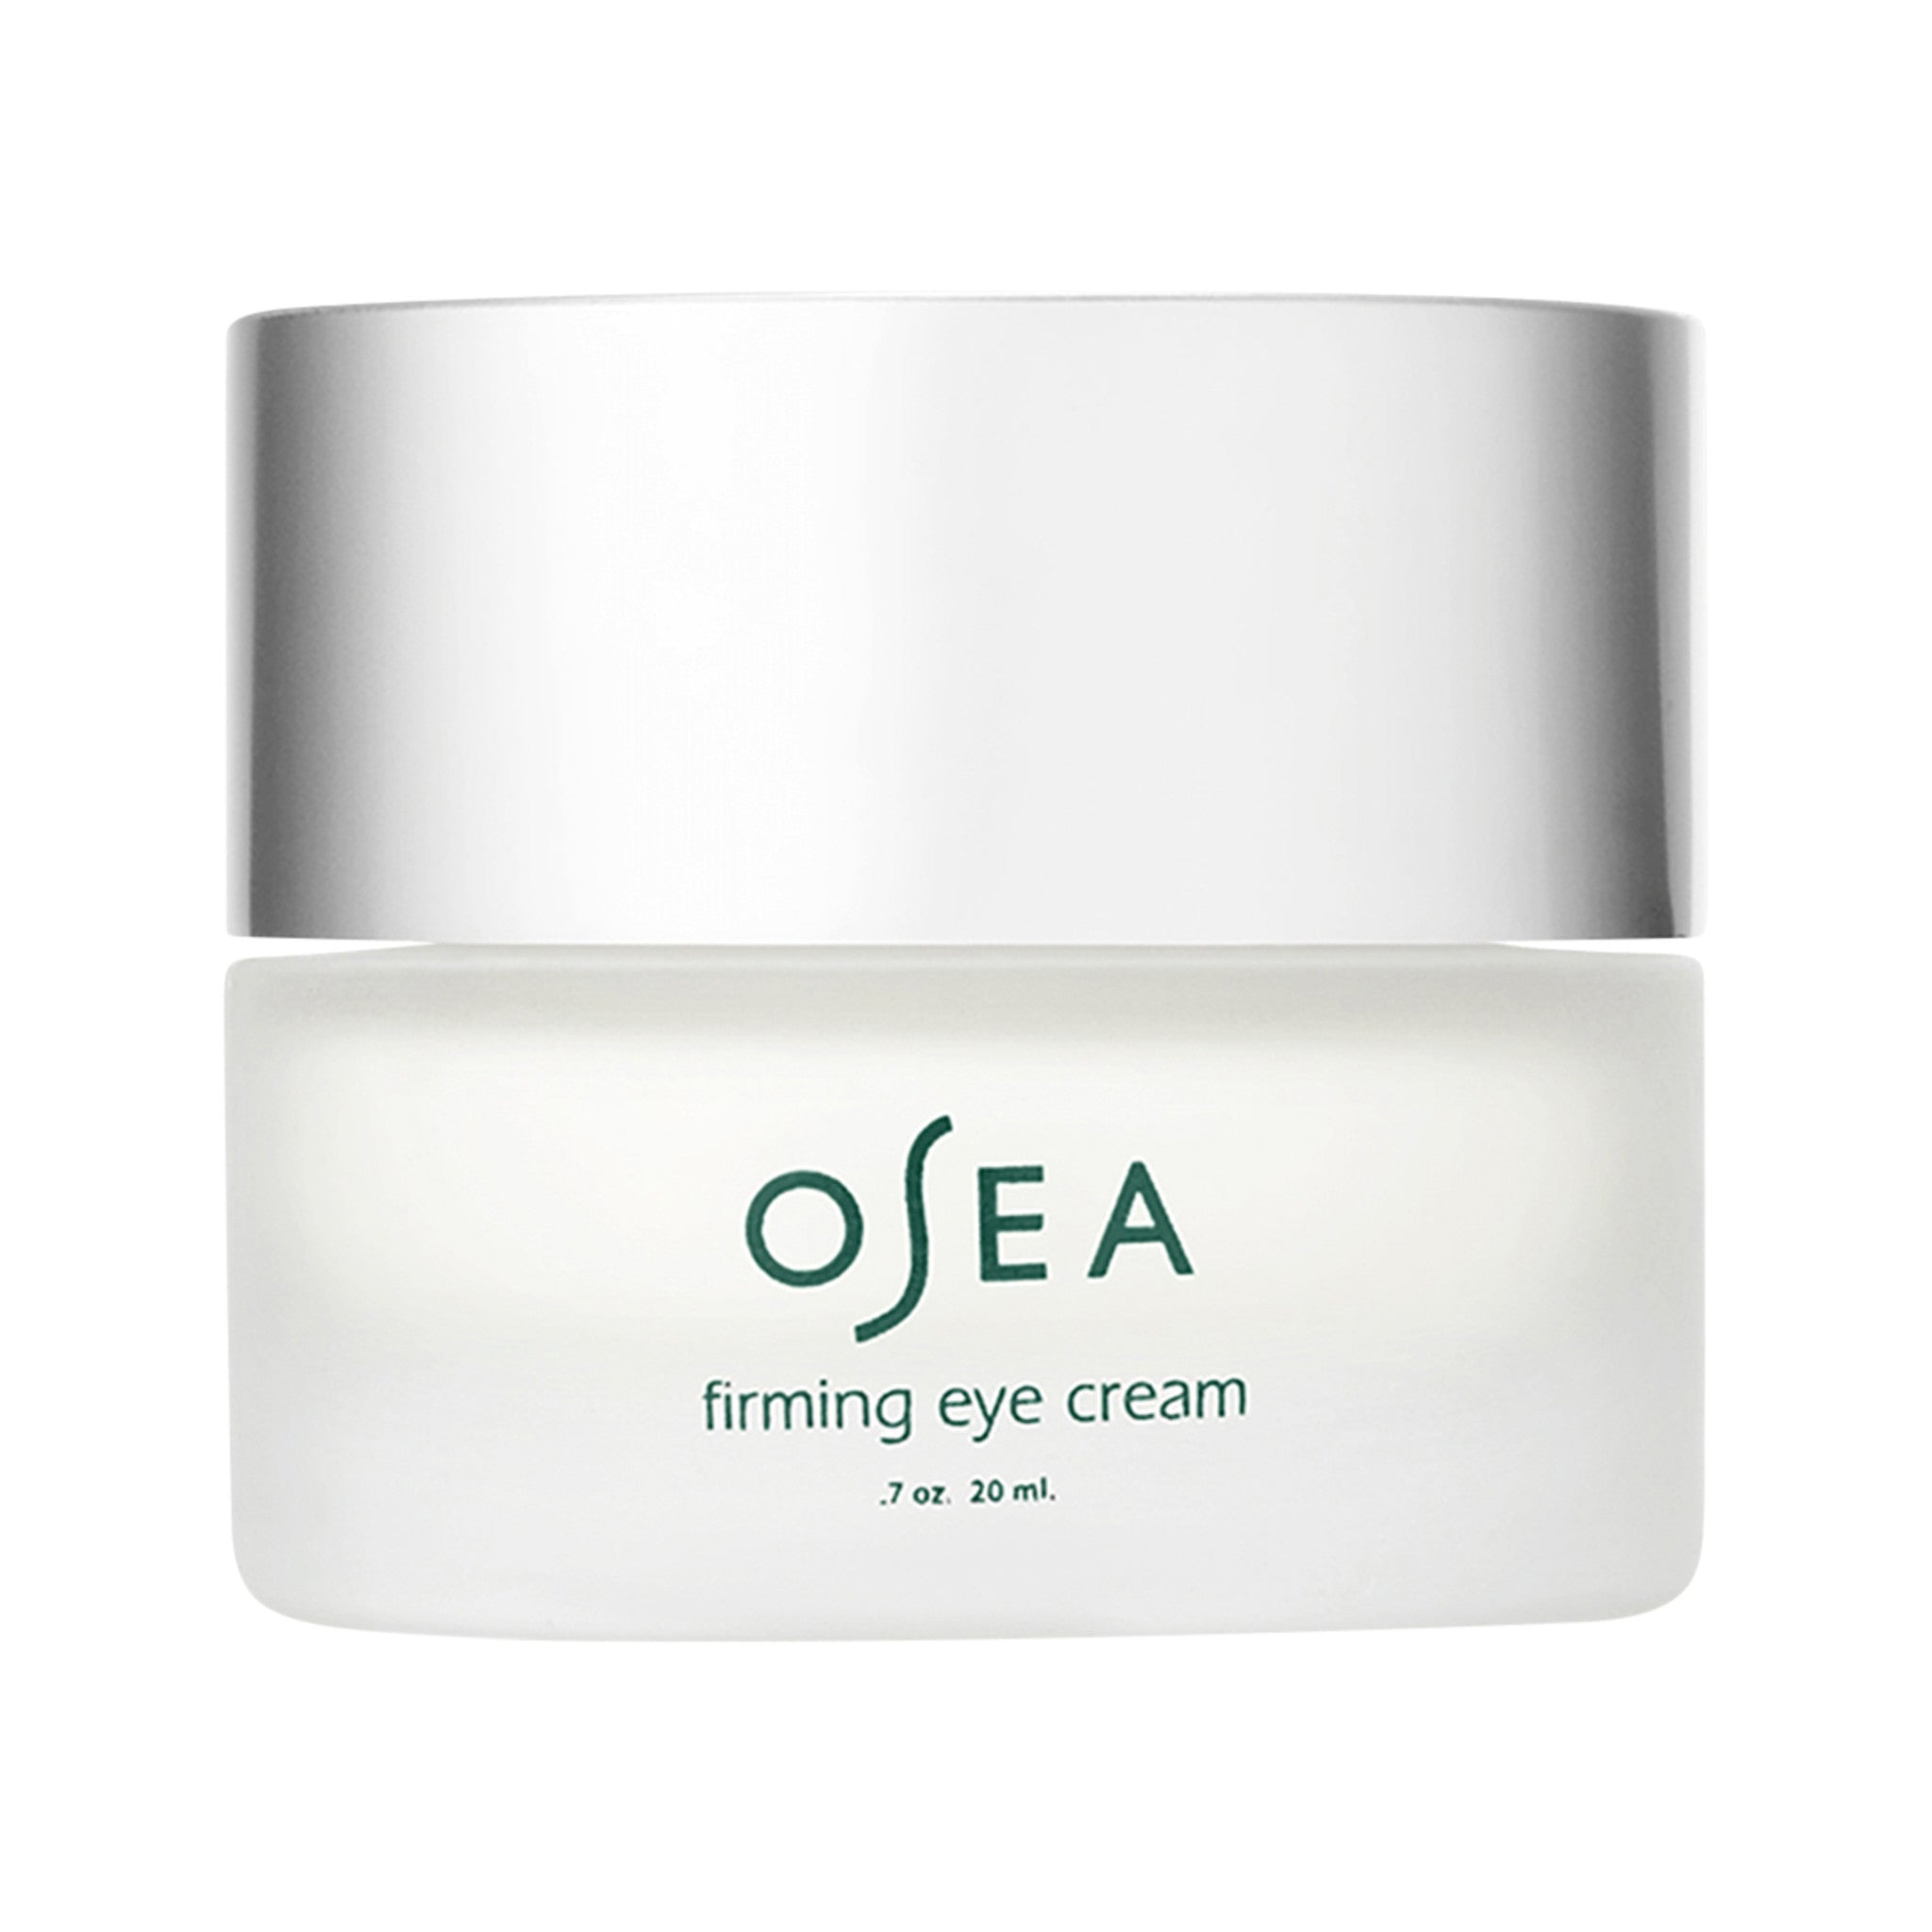 OSEA Firming Eye Cream main image.